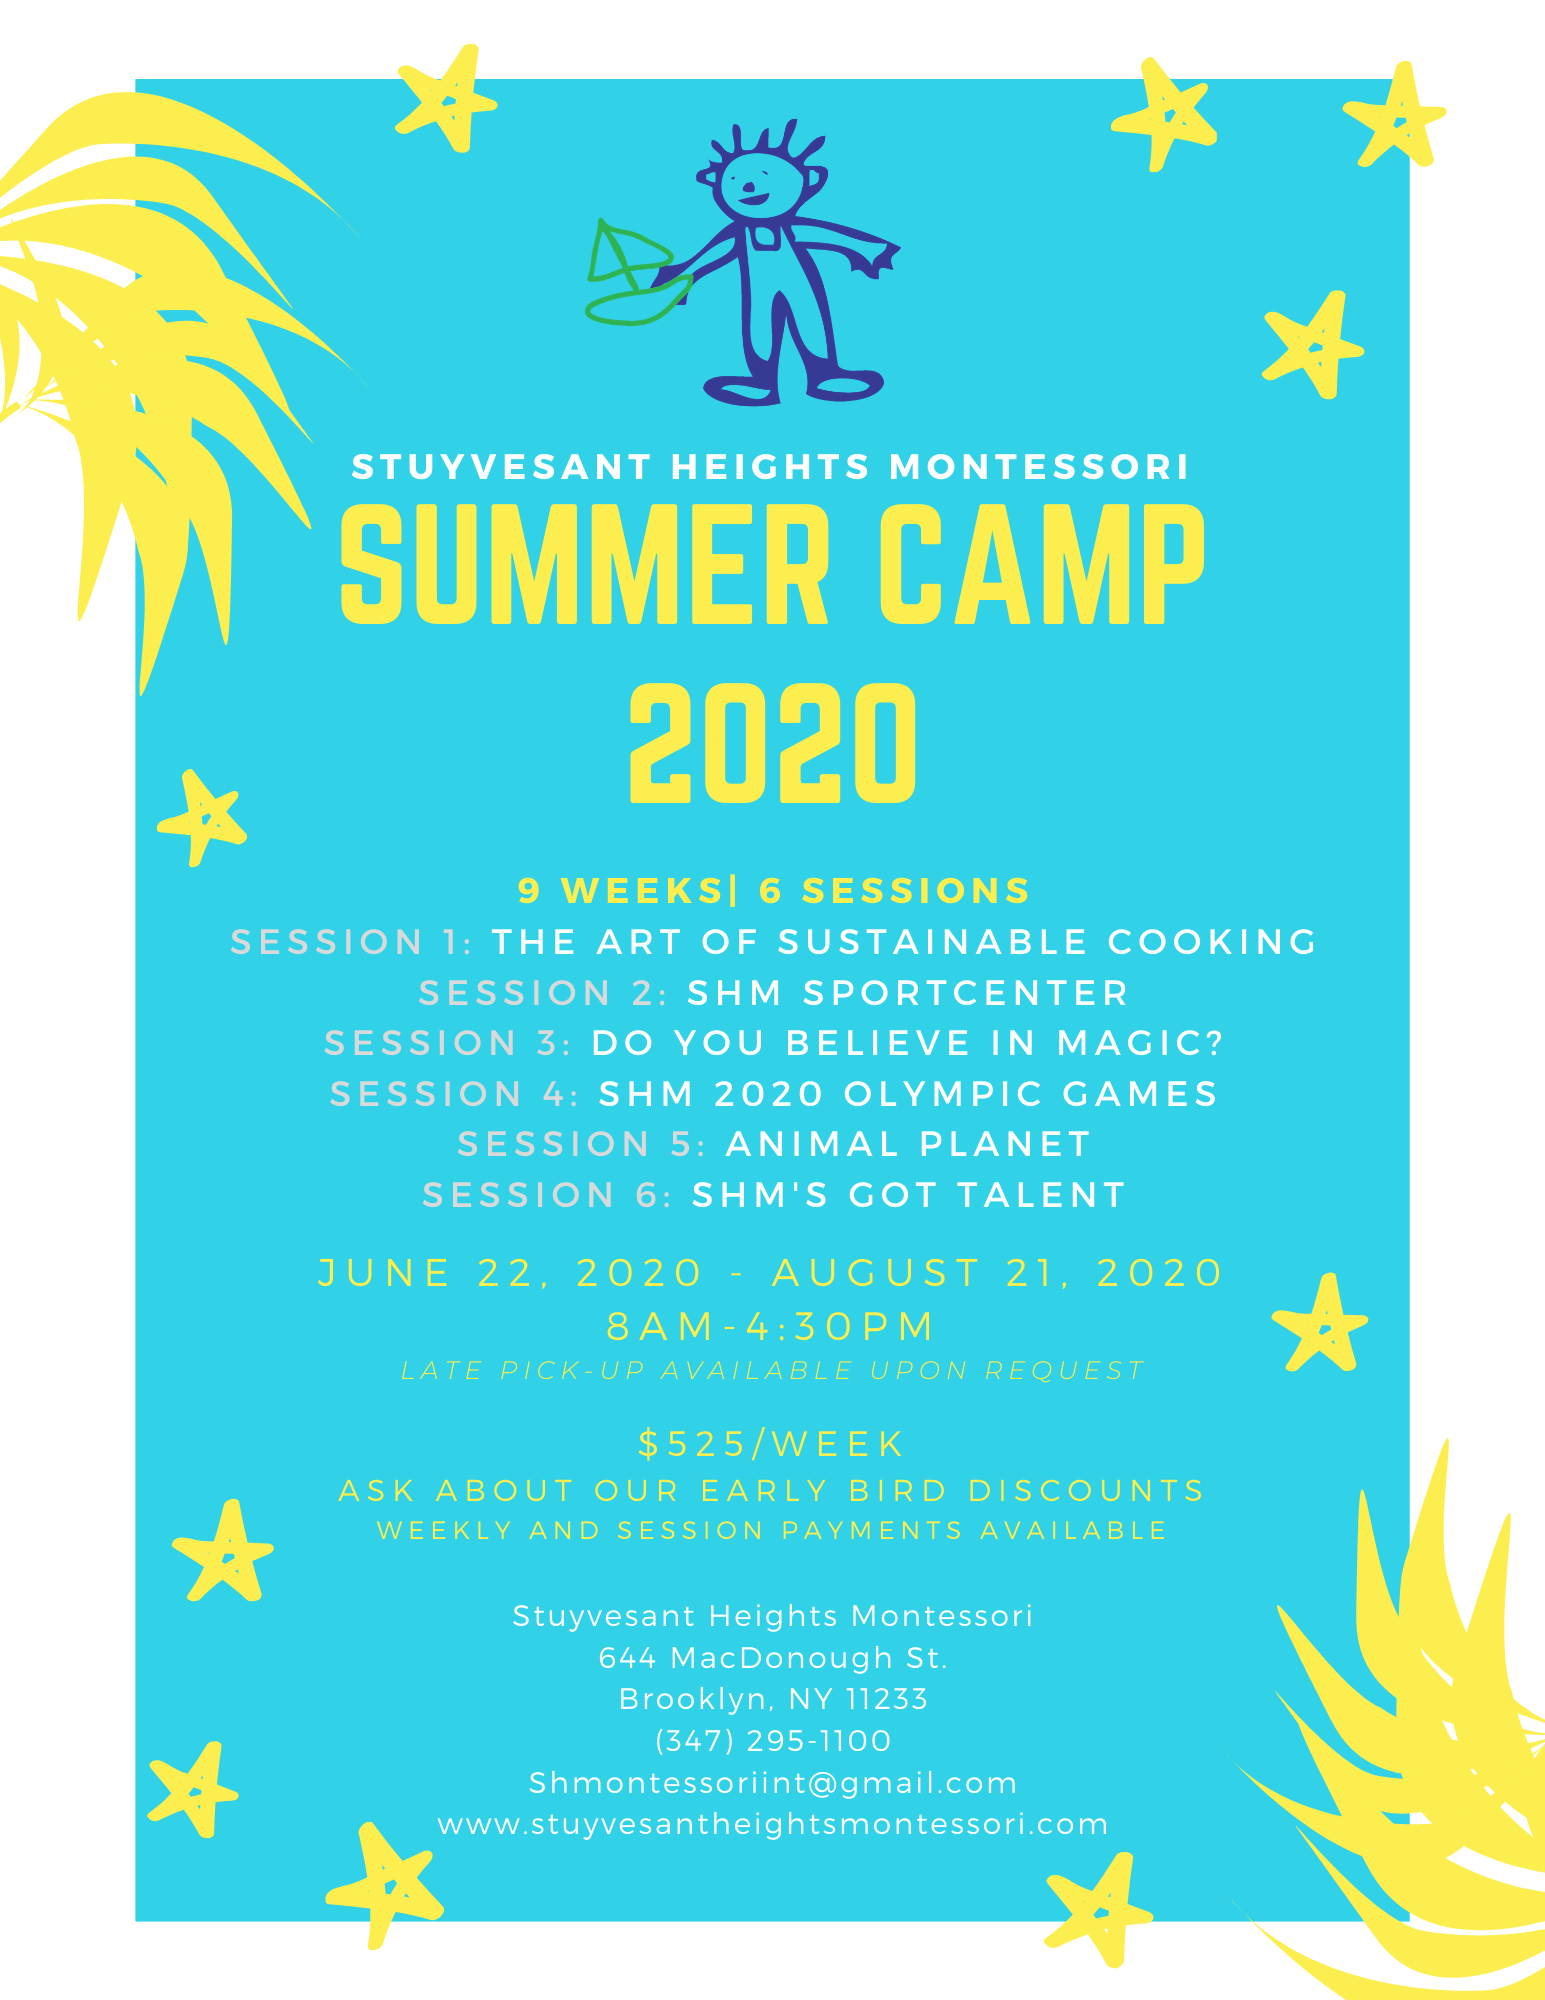 Stuyvesant Heights Montessori Summer Day Camp 2020